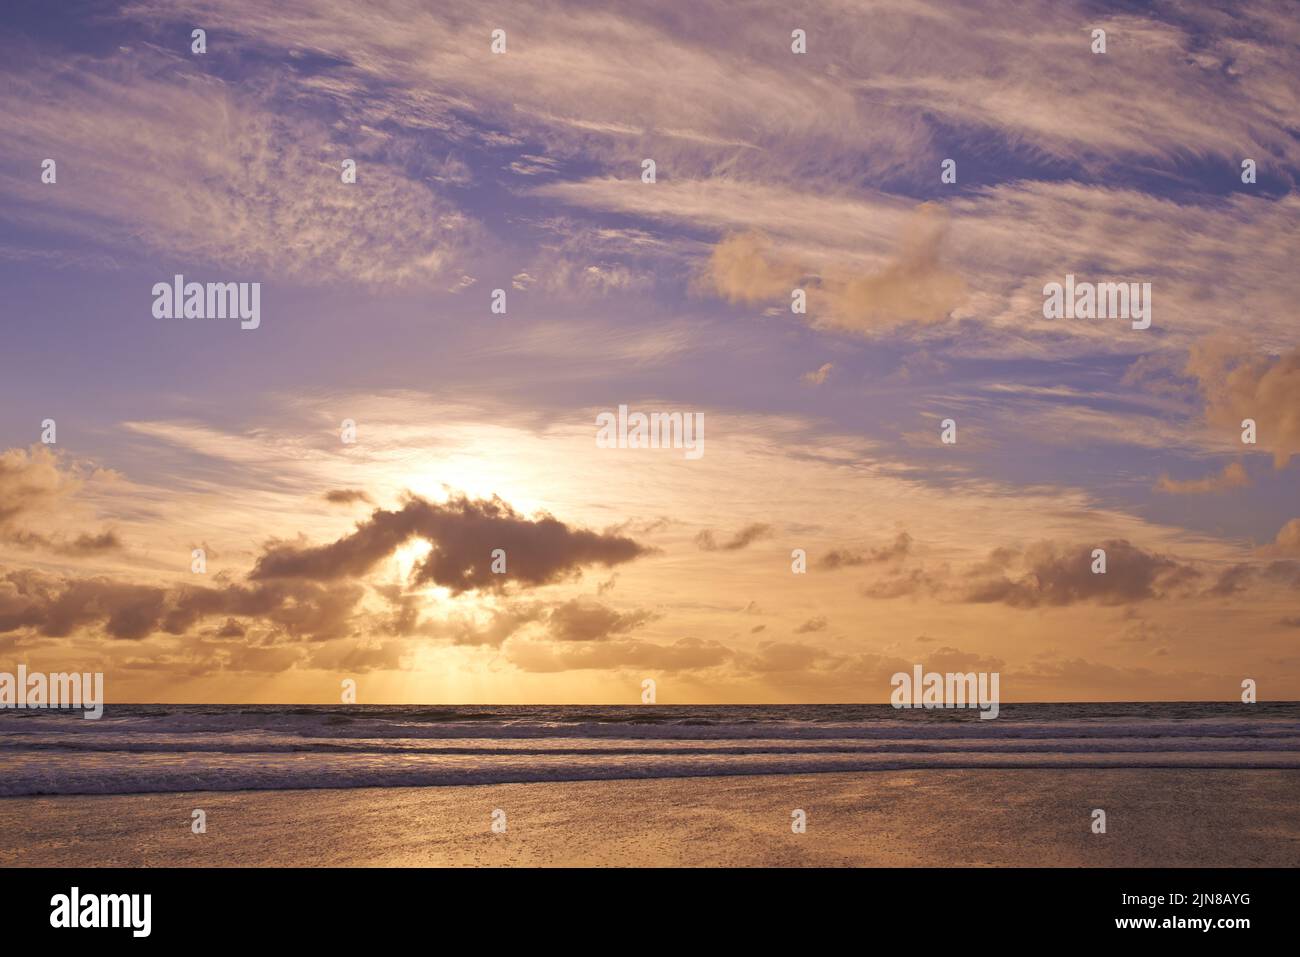 Torrey Pines Beach - San Diego, California, USA. The beautiful Torrey Pines Beach, San Diego, California. Stock Photo